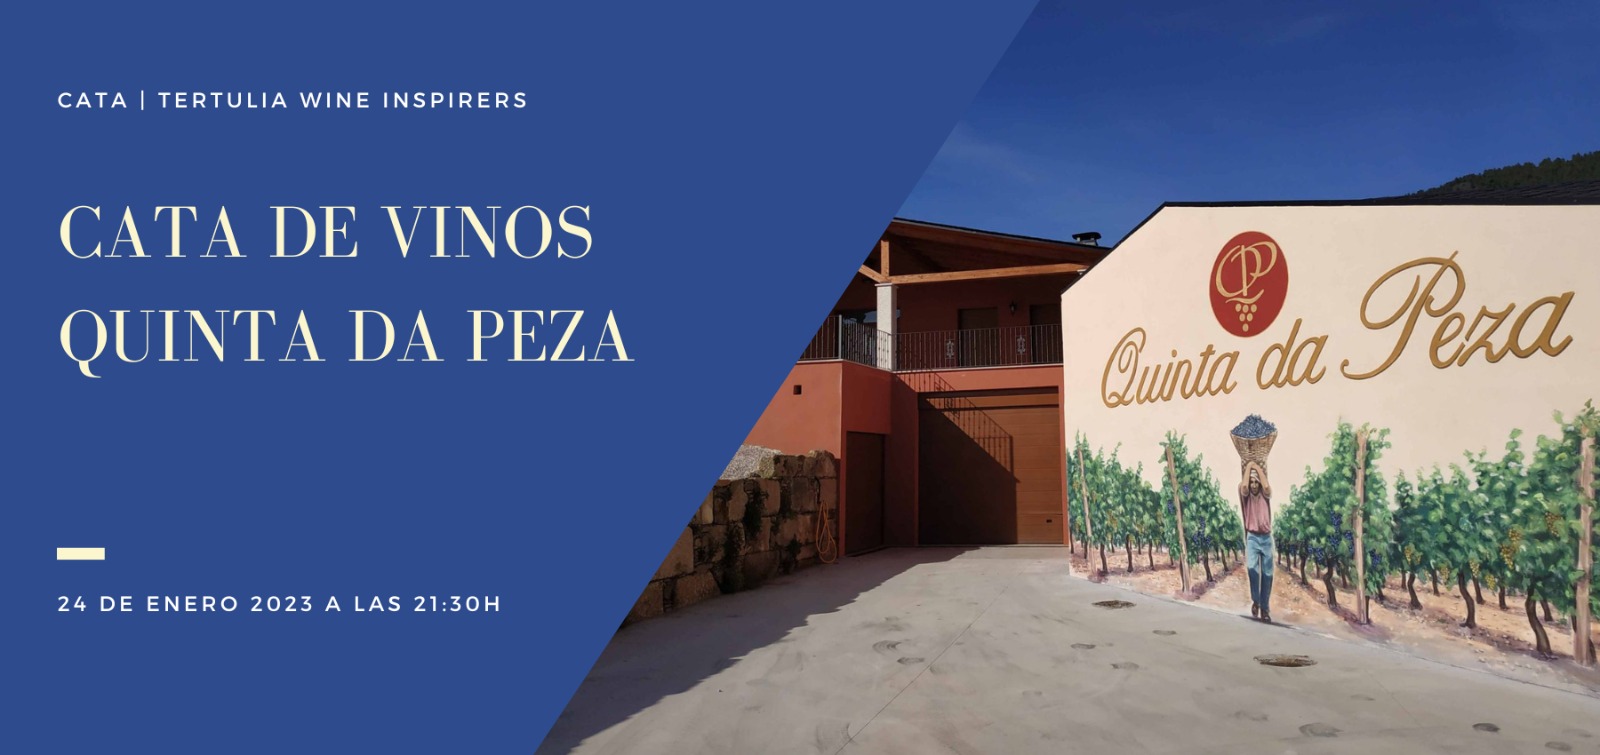 Quinta da Peza - Wine Inspirers